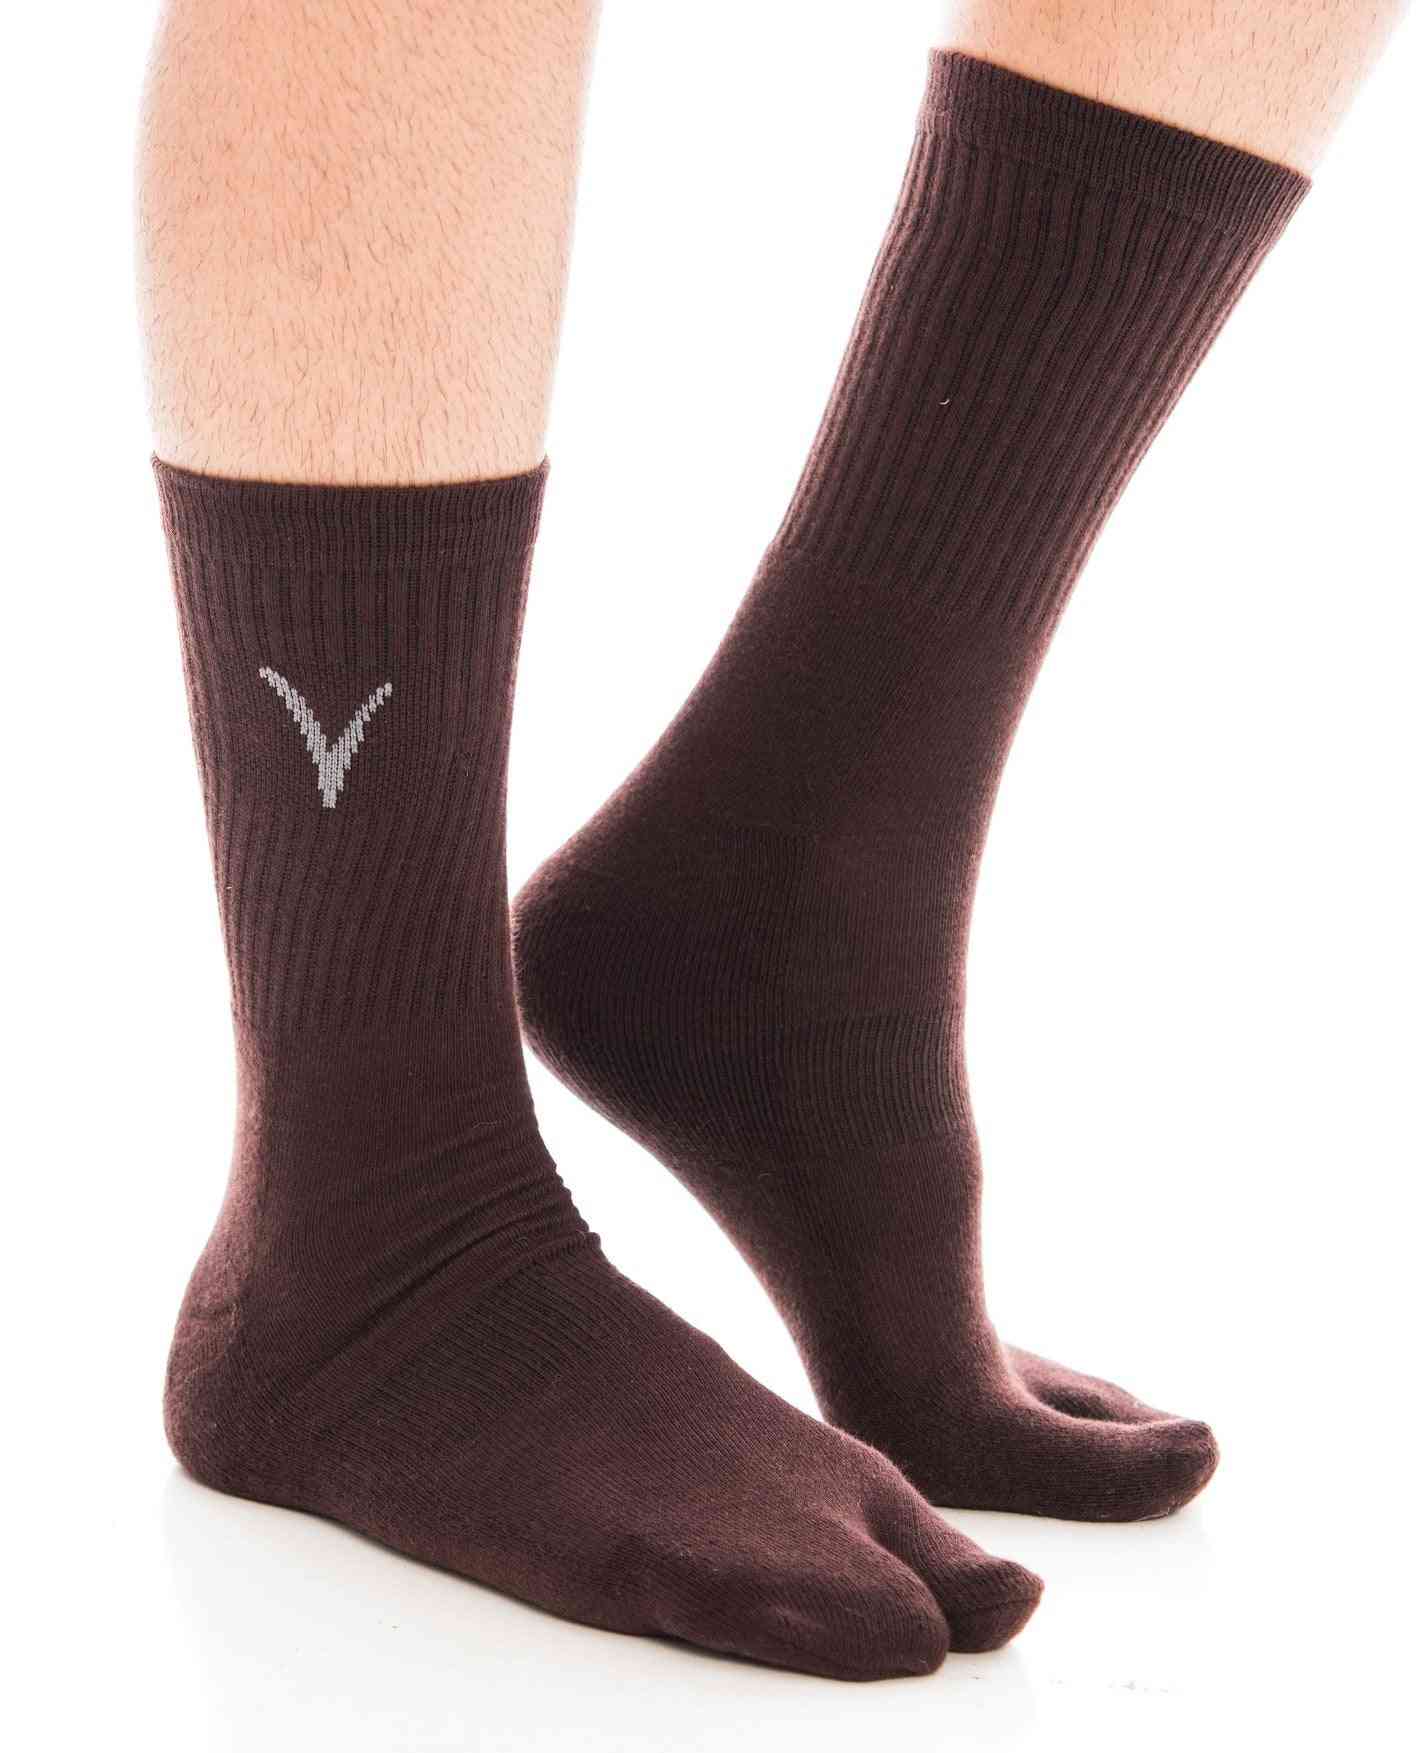 Athletic Flip-flop Socks